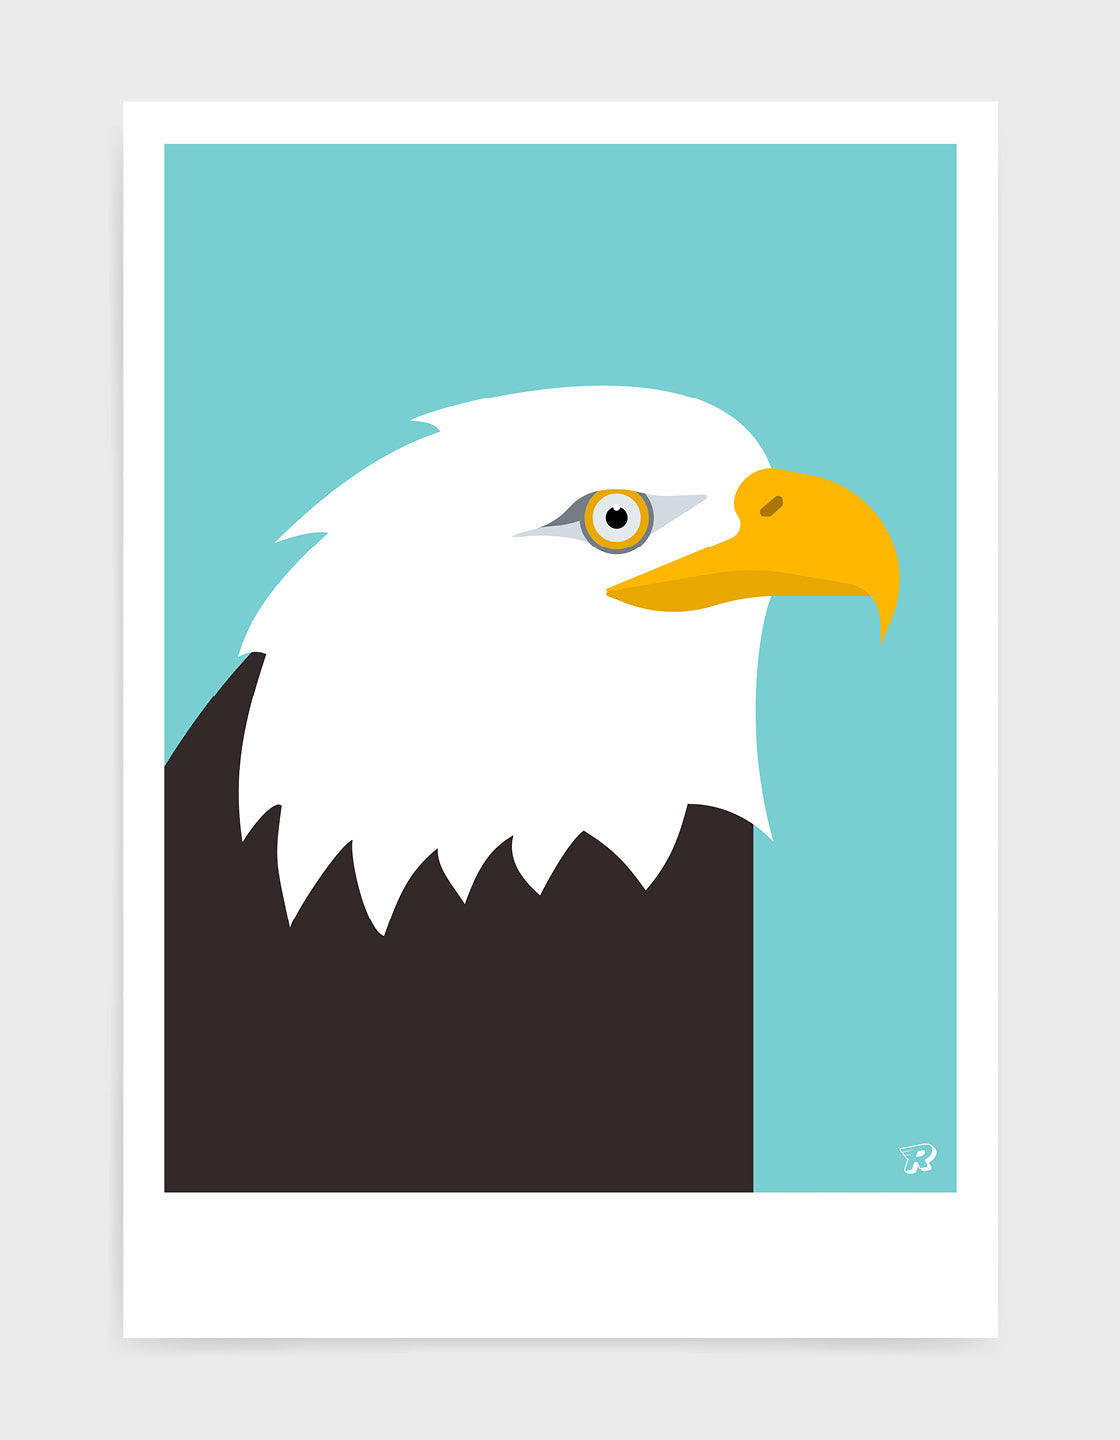 art print of an American bald eagle in profile against a aqua blue background